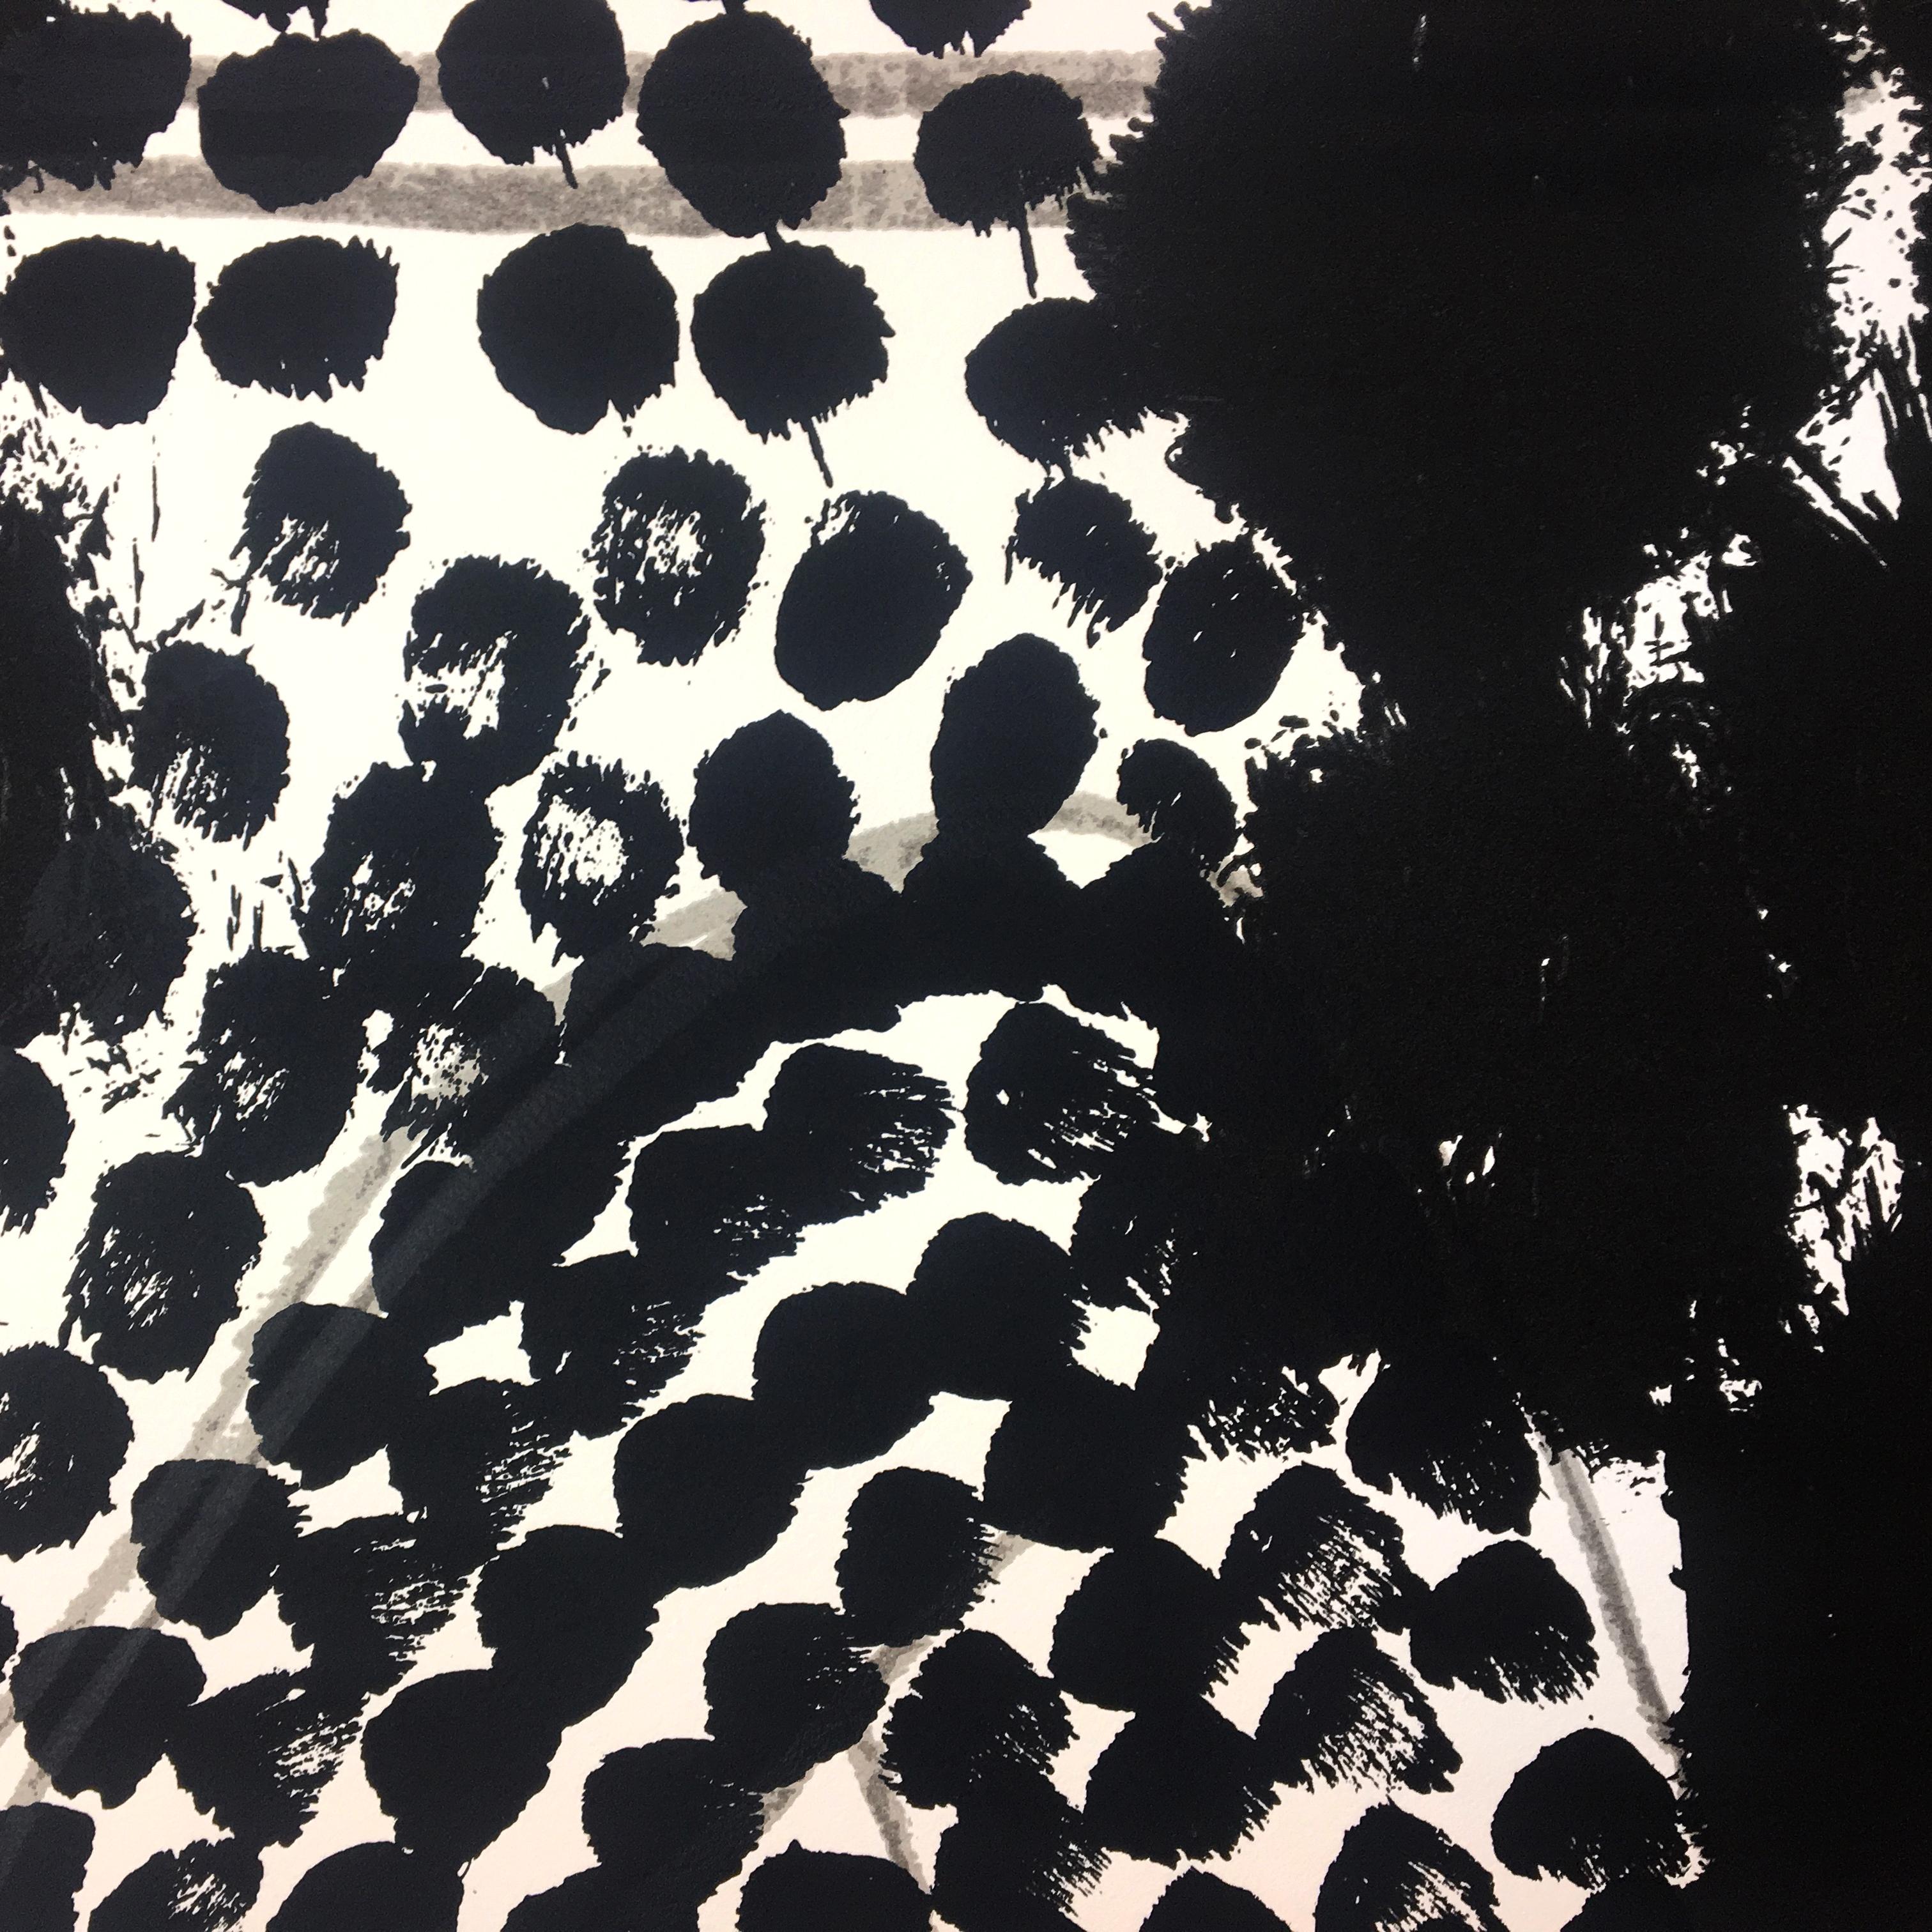 Souvenir, Howard Hodgkin: large scale black white gray abstract interior scene  5